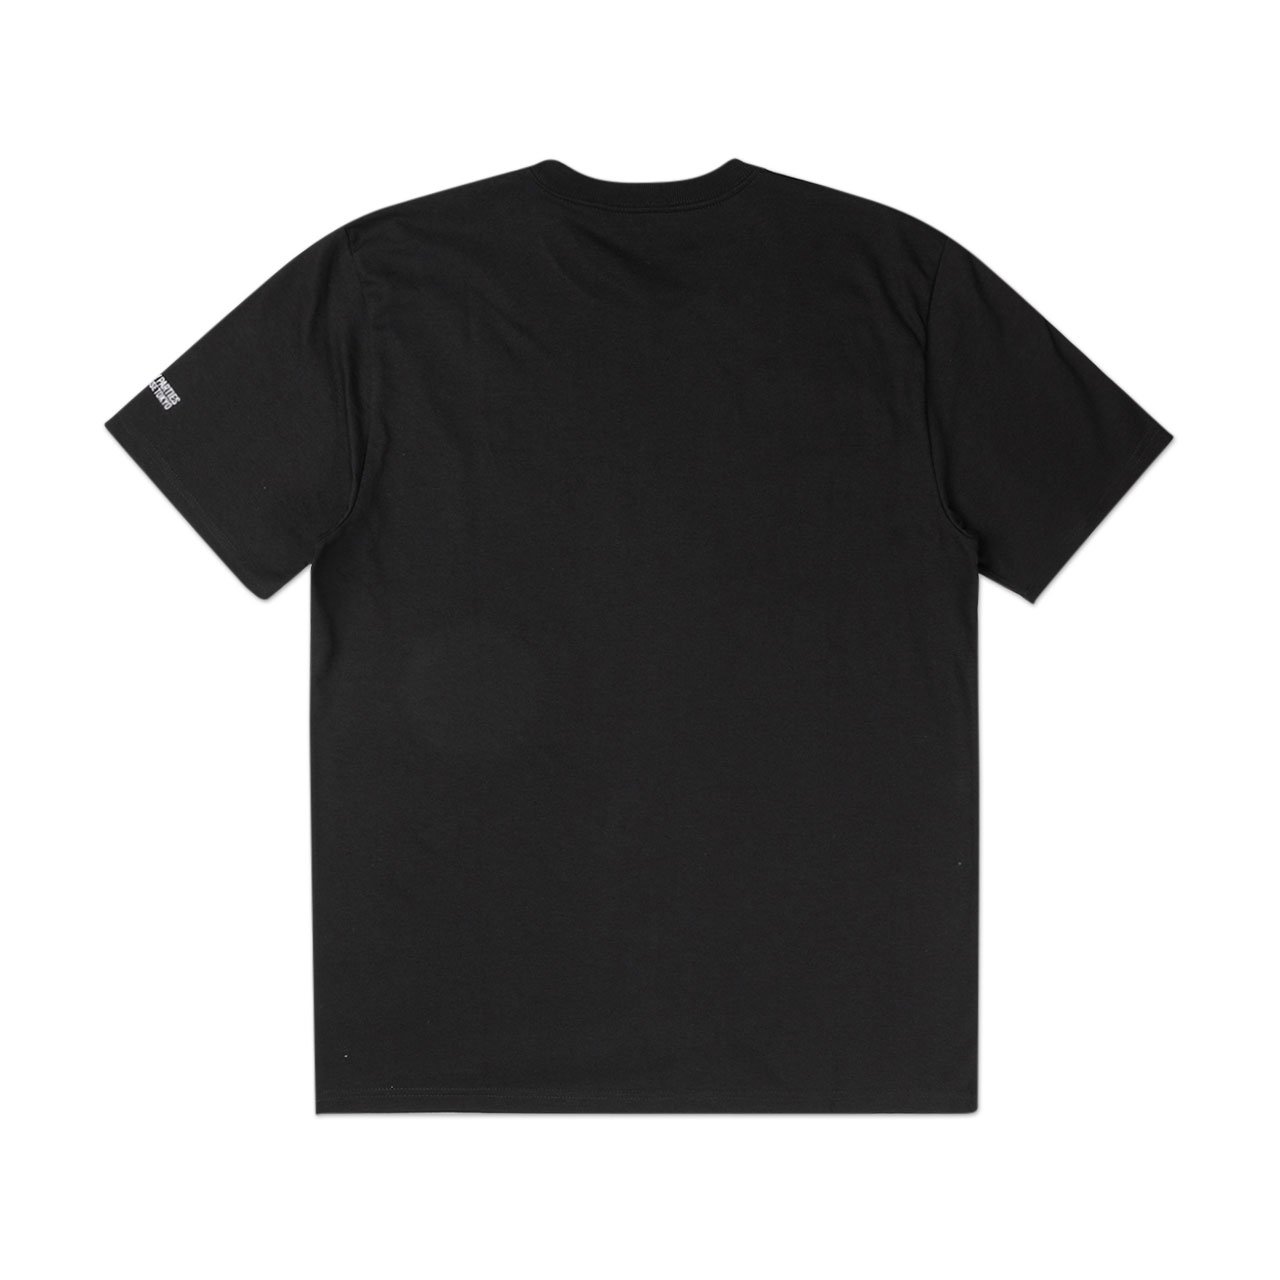 carhartt wip x wacko maria american script t-shirt (black) - i028249.0d6.00.03 - a.plus - Image - 2